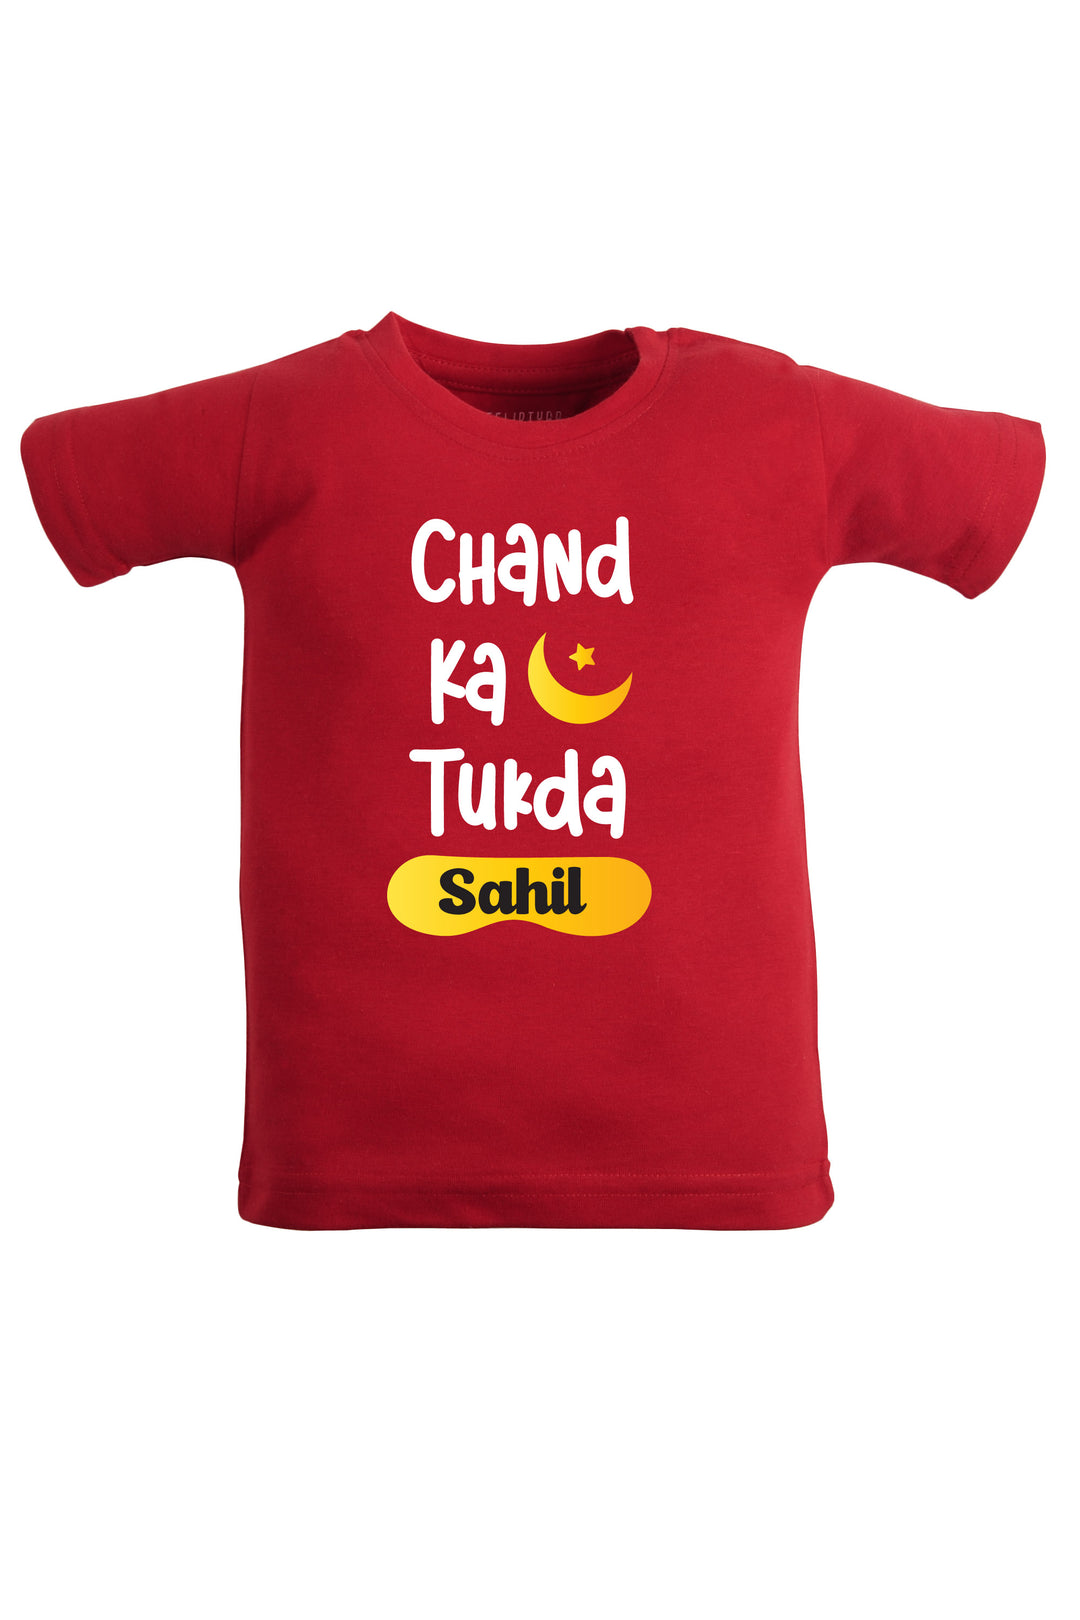 Chand Ka Tukda Kids T Shirt w/Custom Name